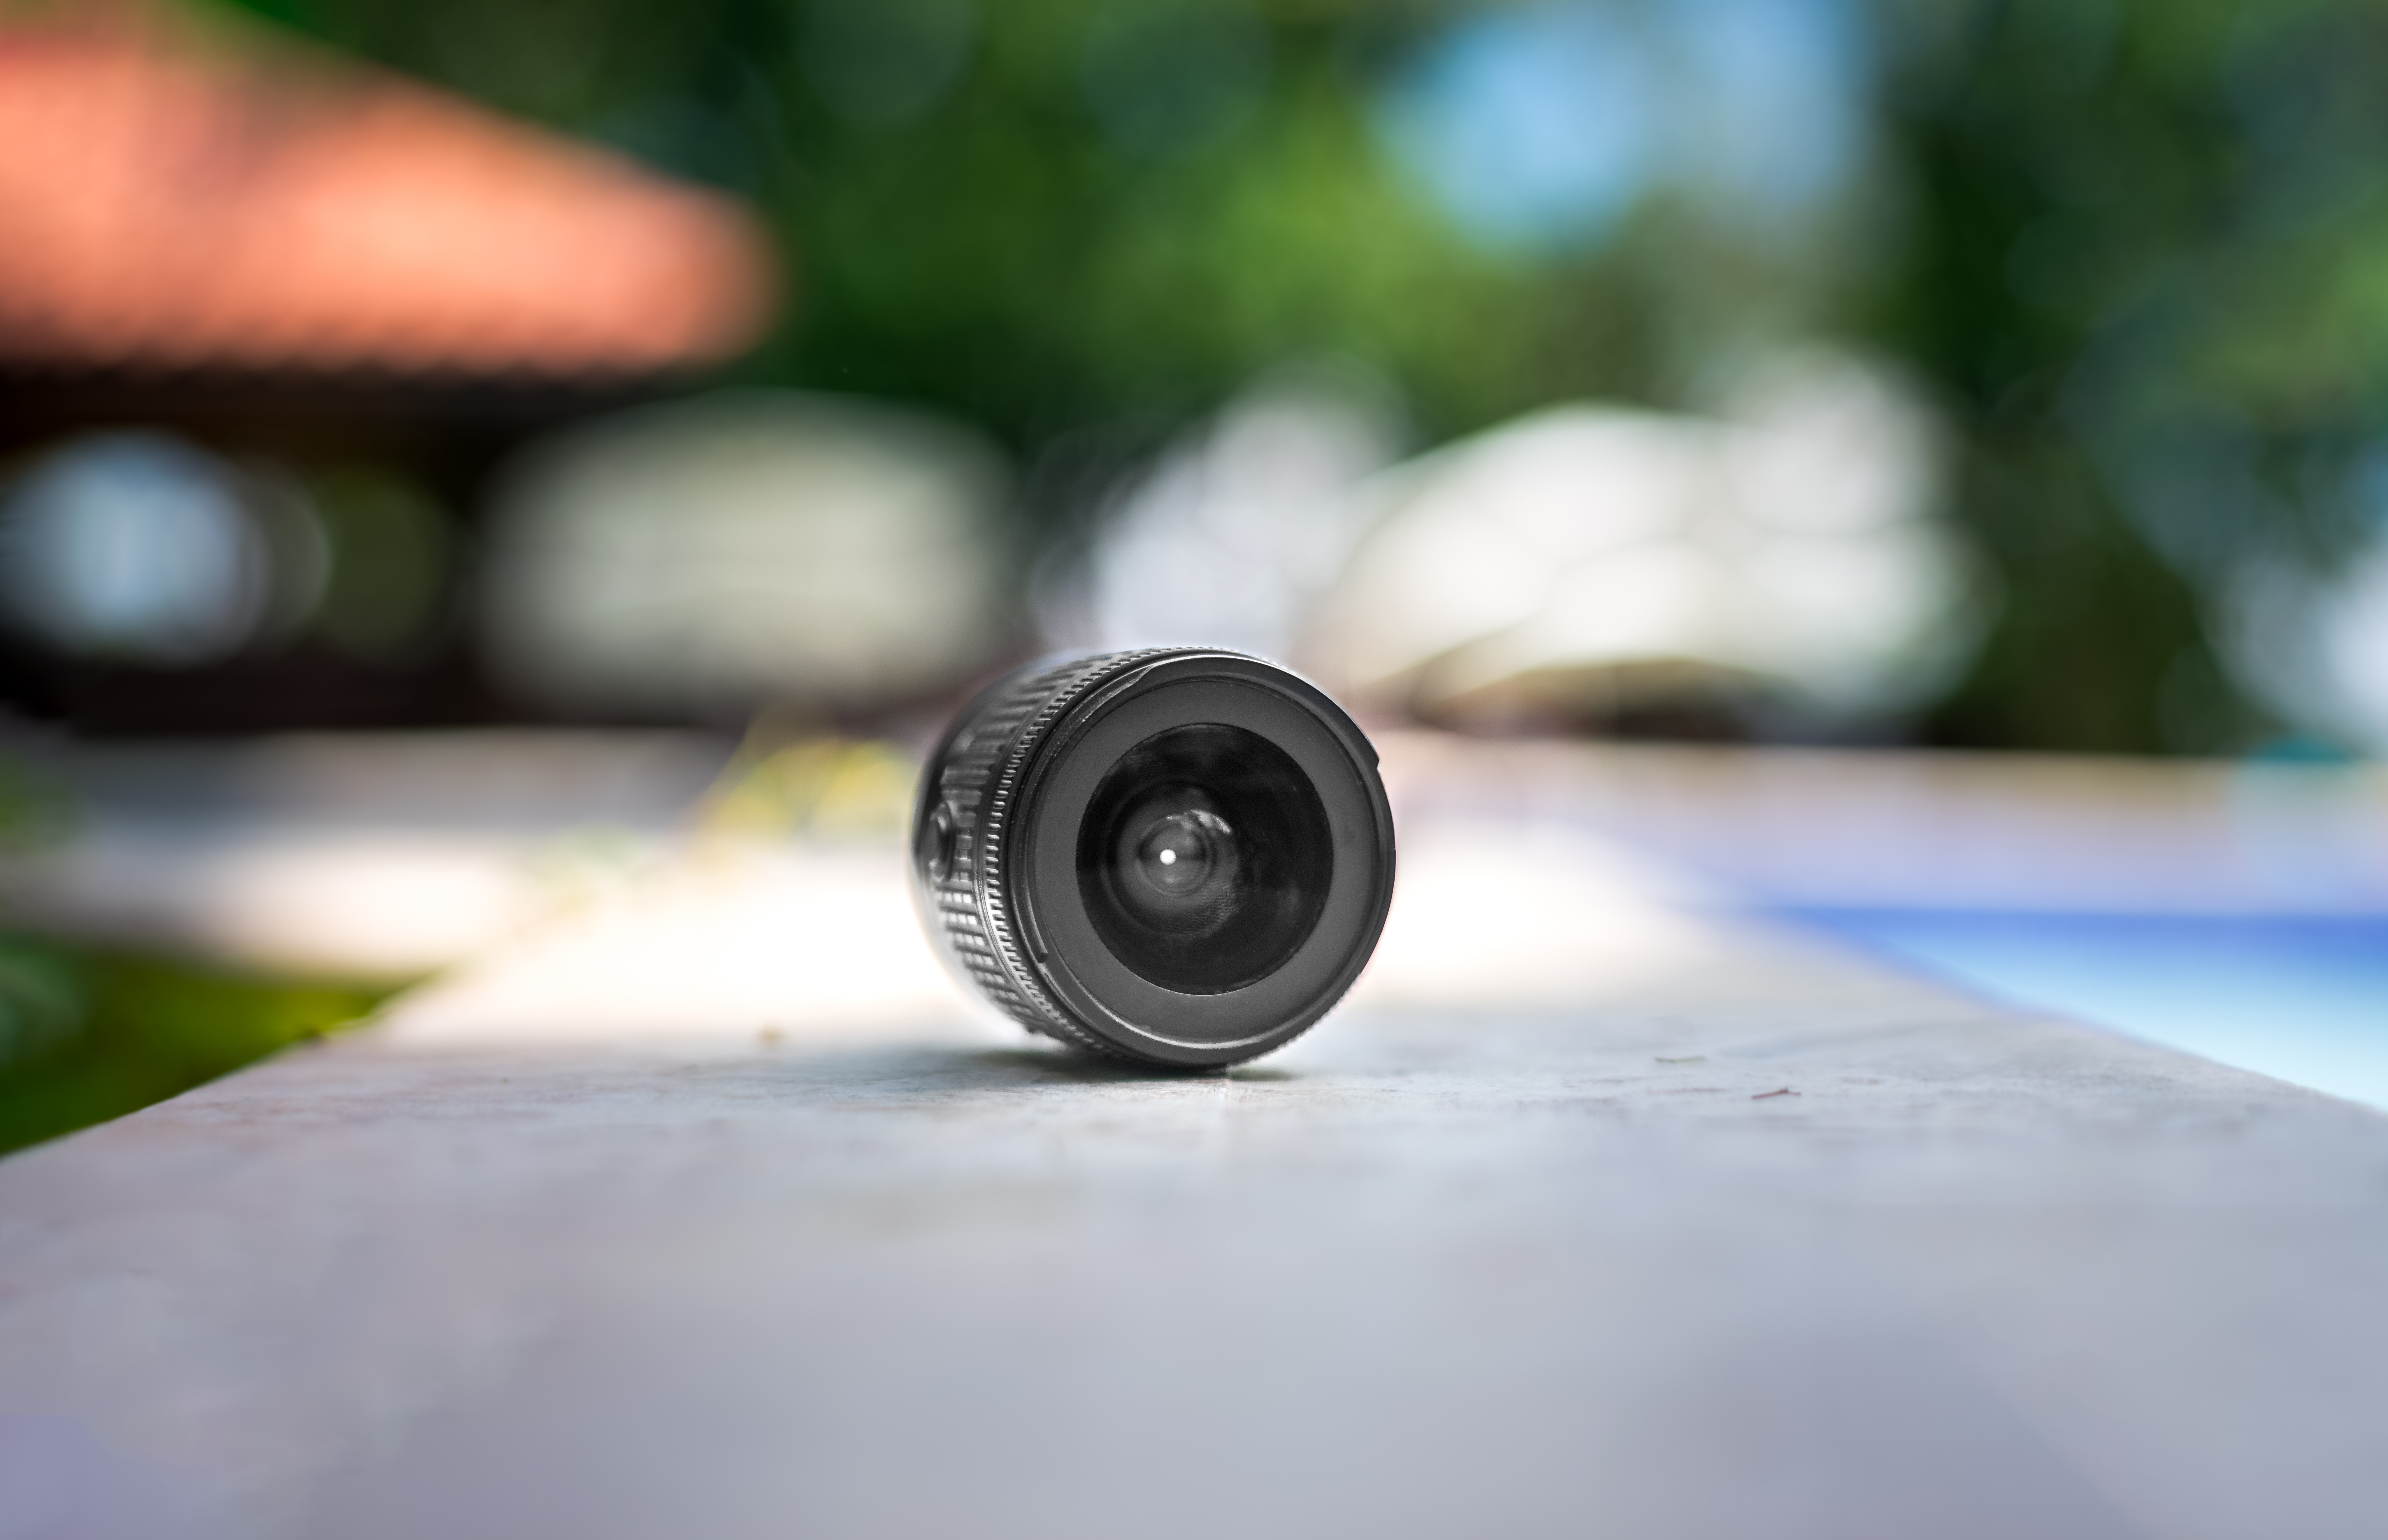 A Beautiful Image of a camera Lens